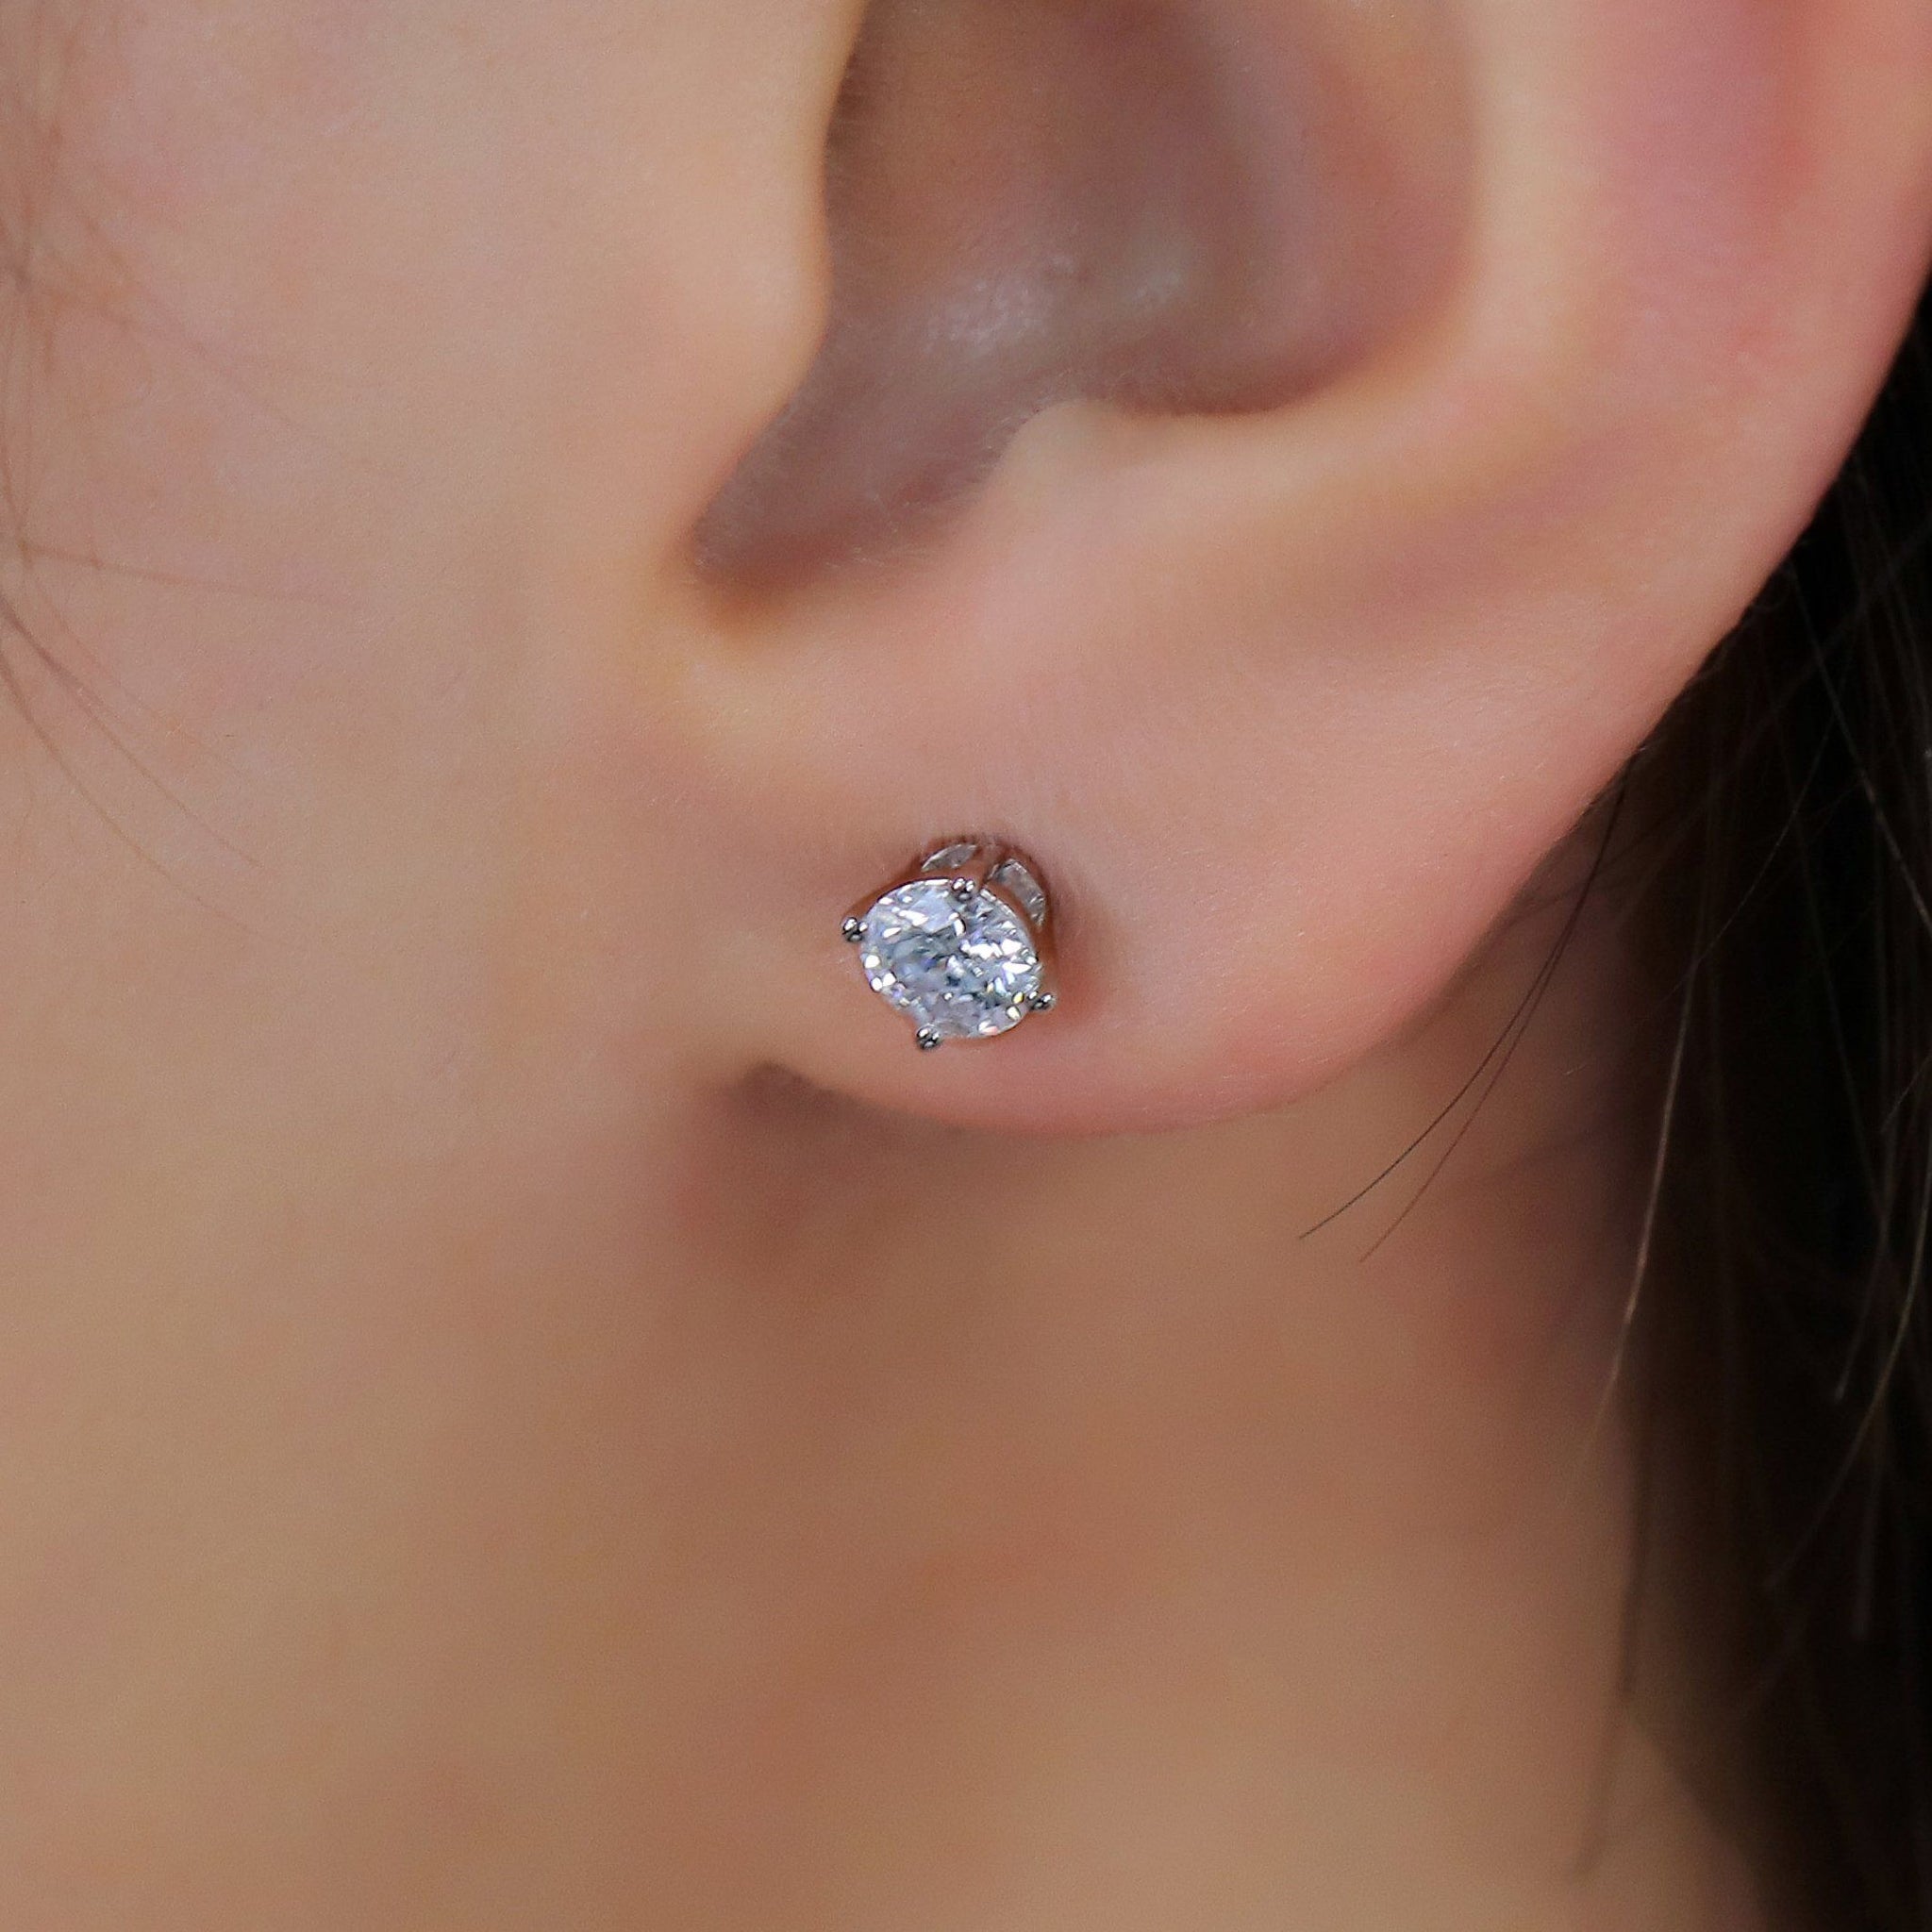 doveggs lab created CVD diamond earring 14k-18k white gold 0.8 carat def color round diamond studs push back for women - DovEggs-Seattle